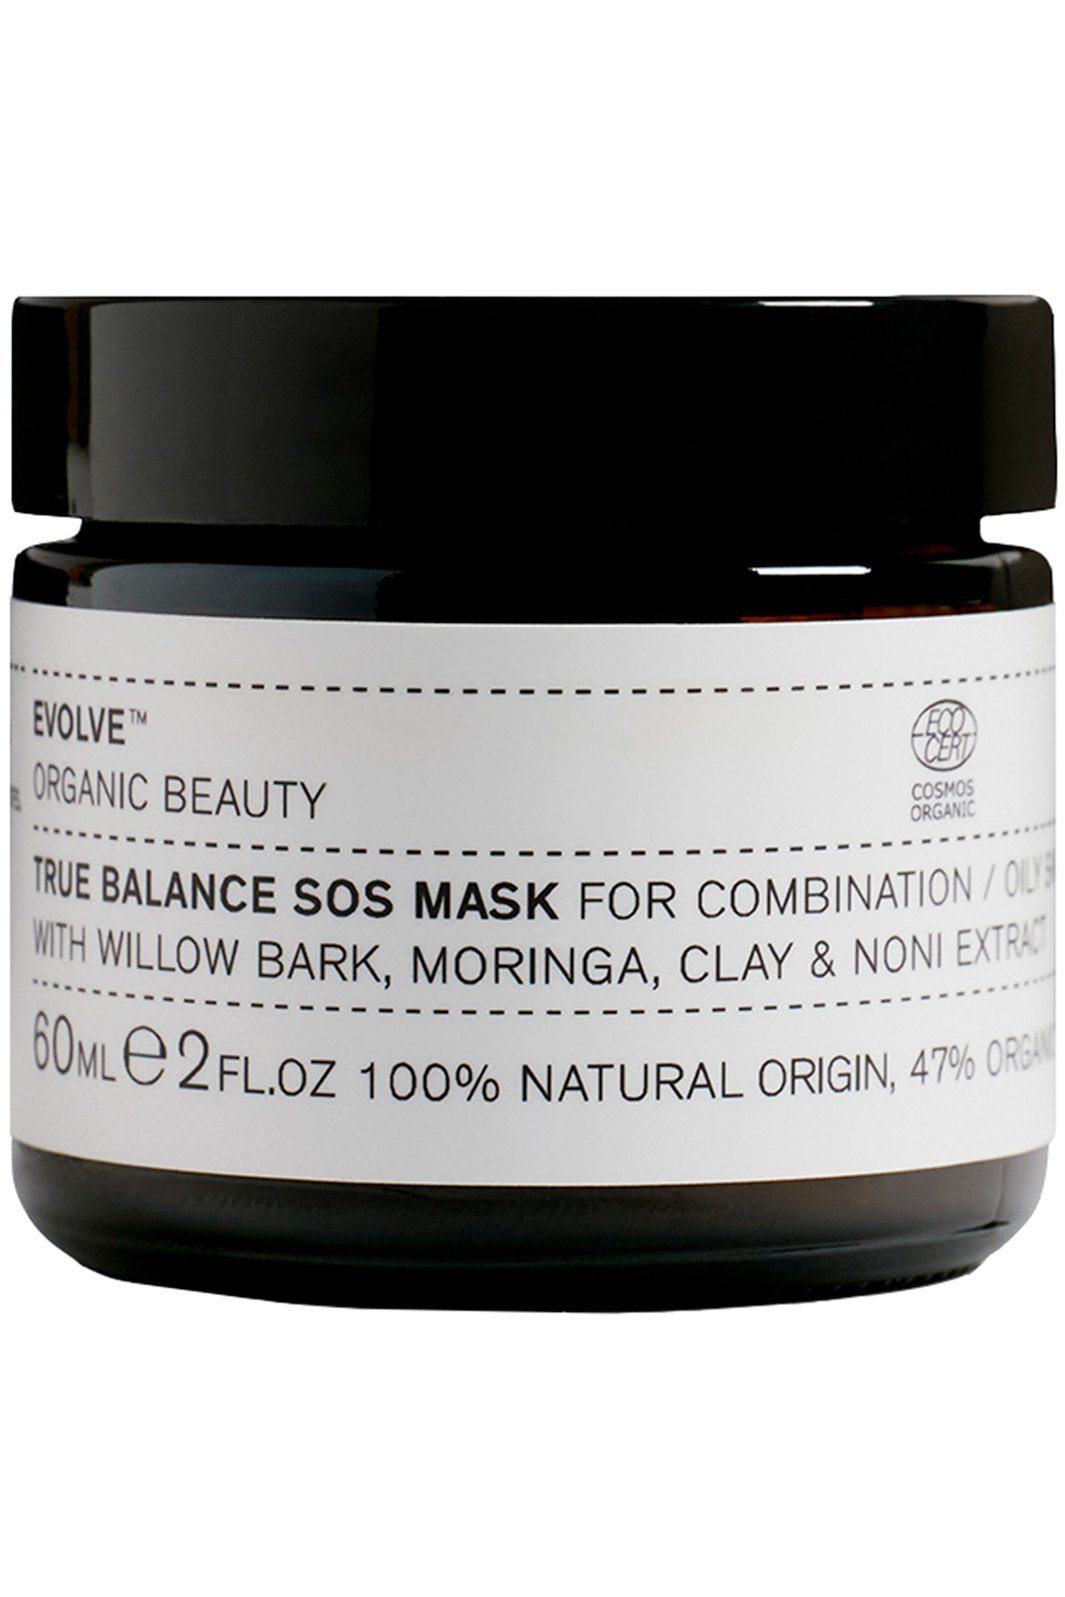 Evolve - True Balance Sos Mask - 60 ml Masker 